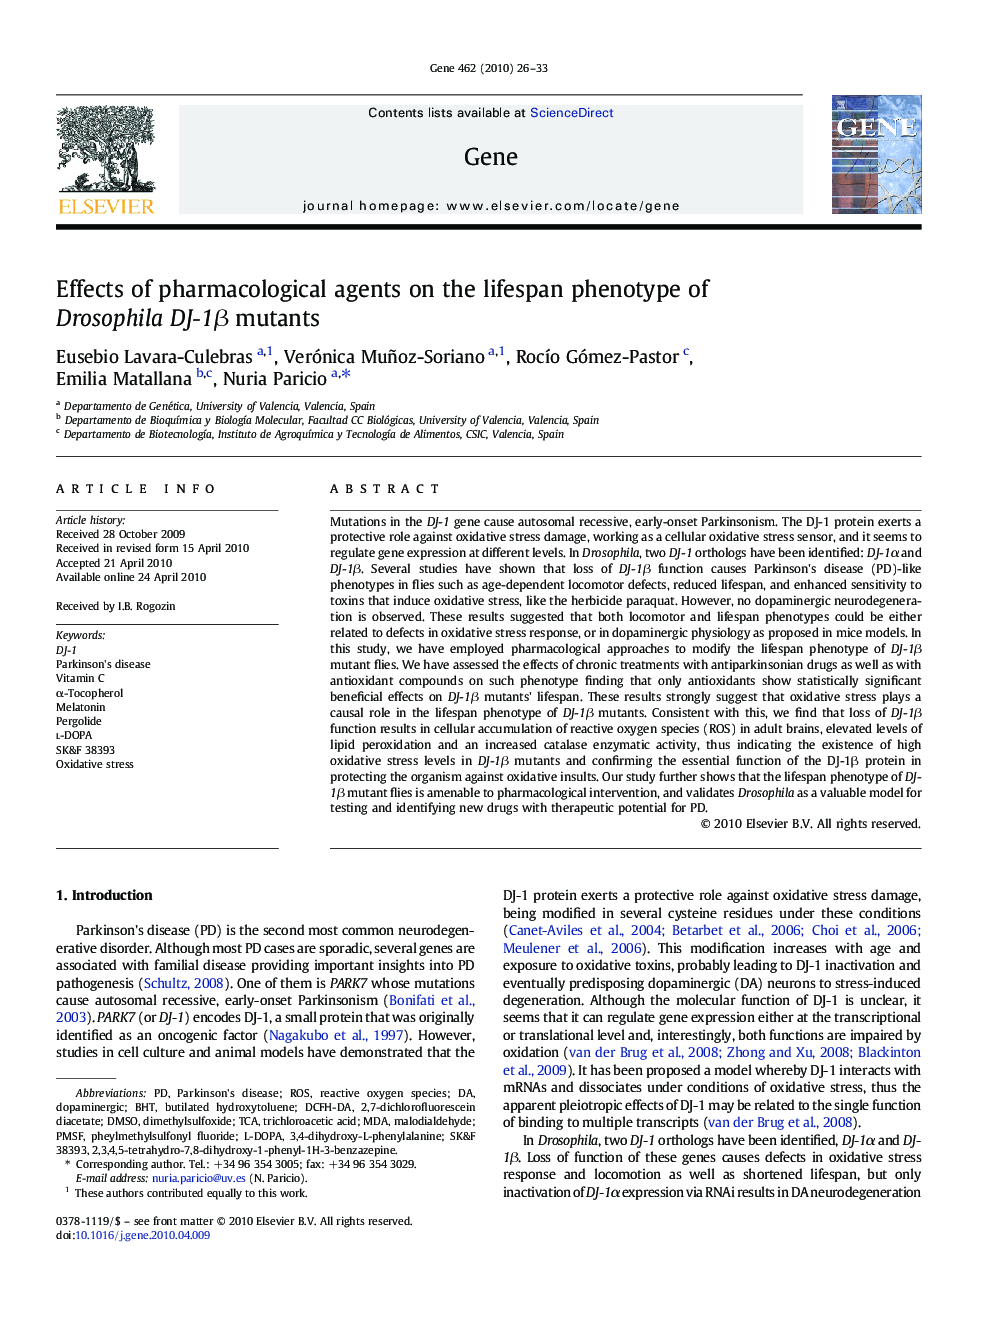 Effects of pharmacological agents on the lifespan phenotype of Drosophila DJ-1β mutants